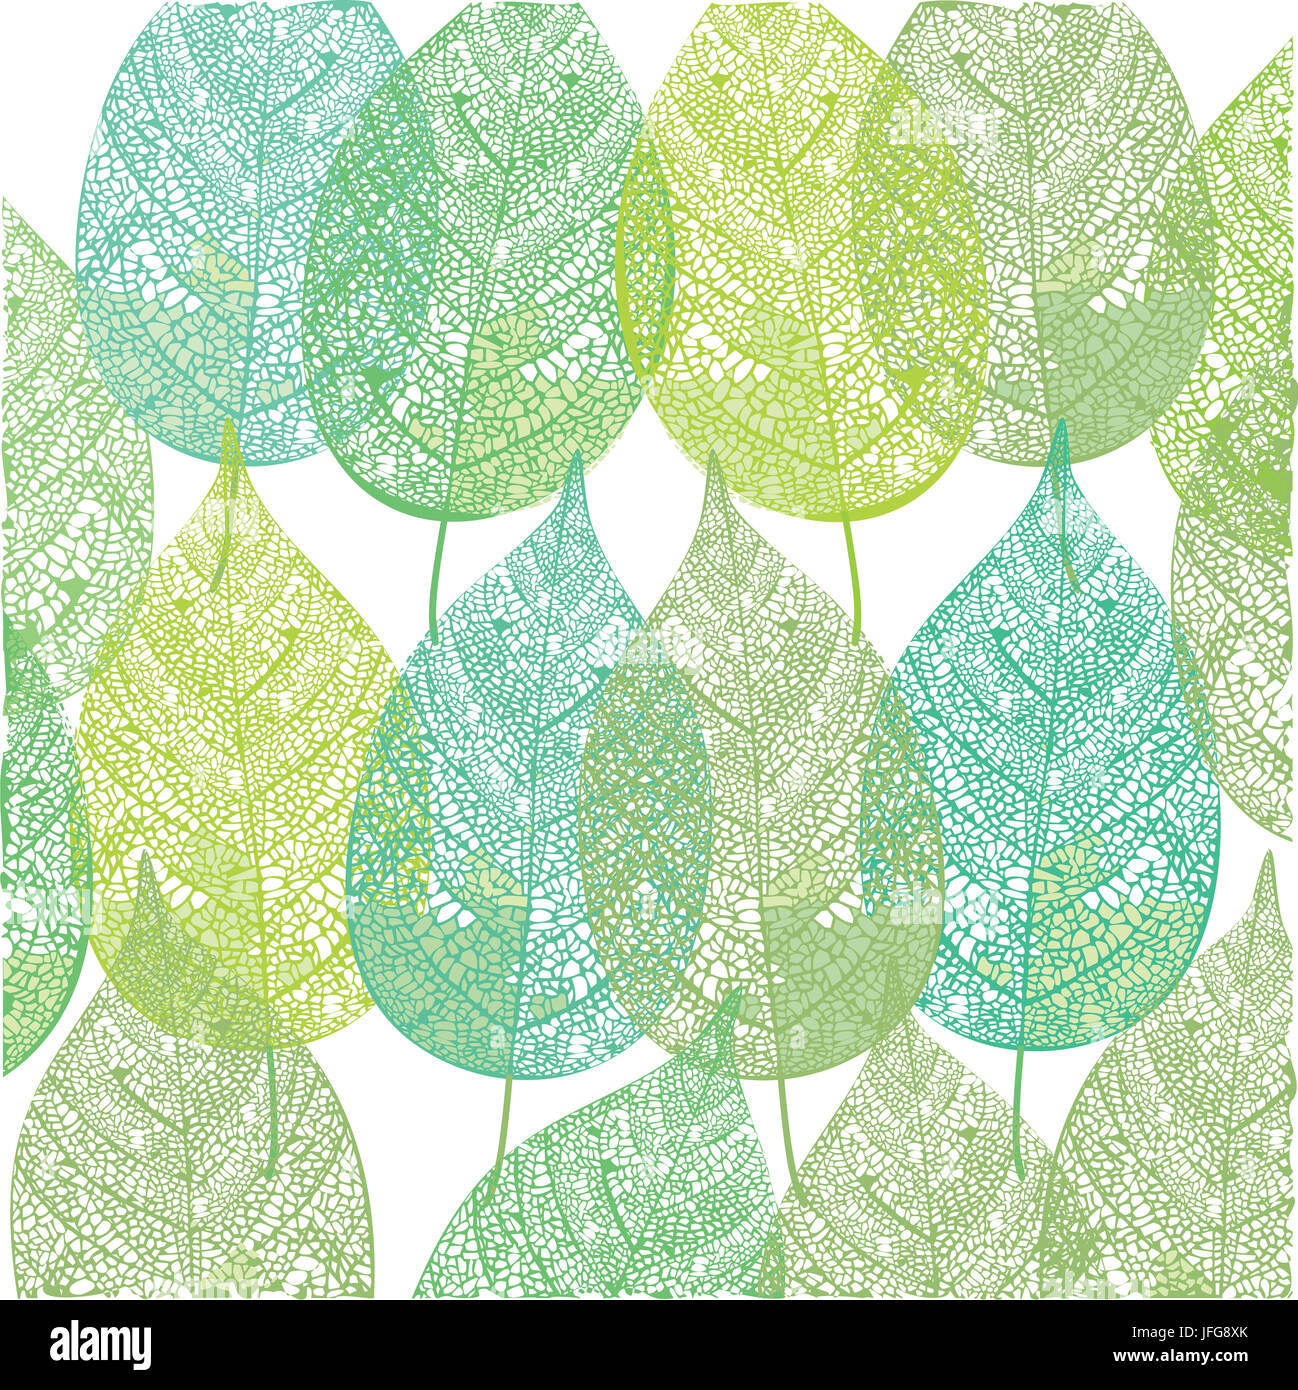 Green plant leaves pattern illustration Stock Photo